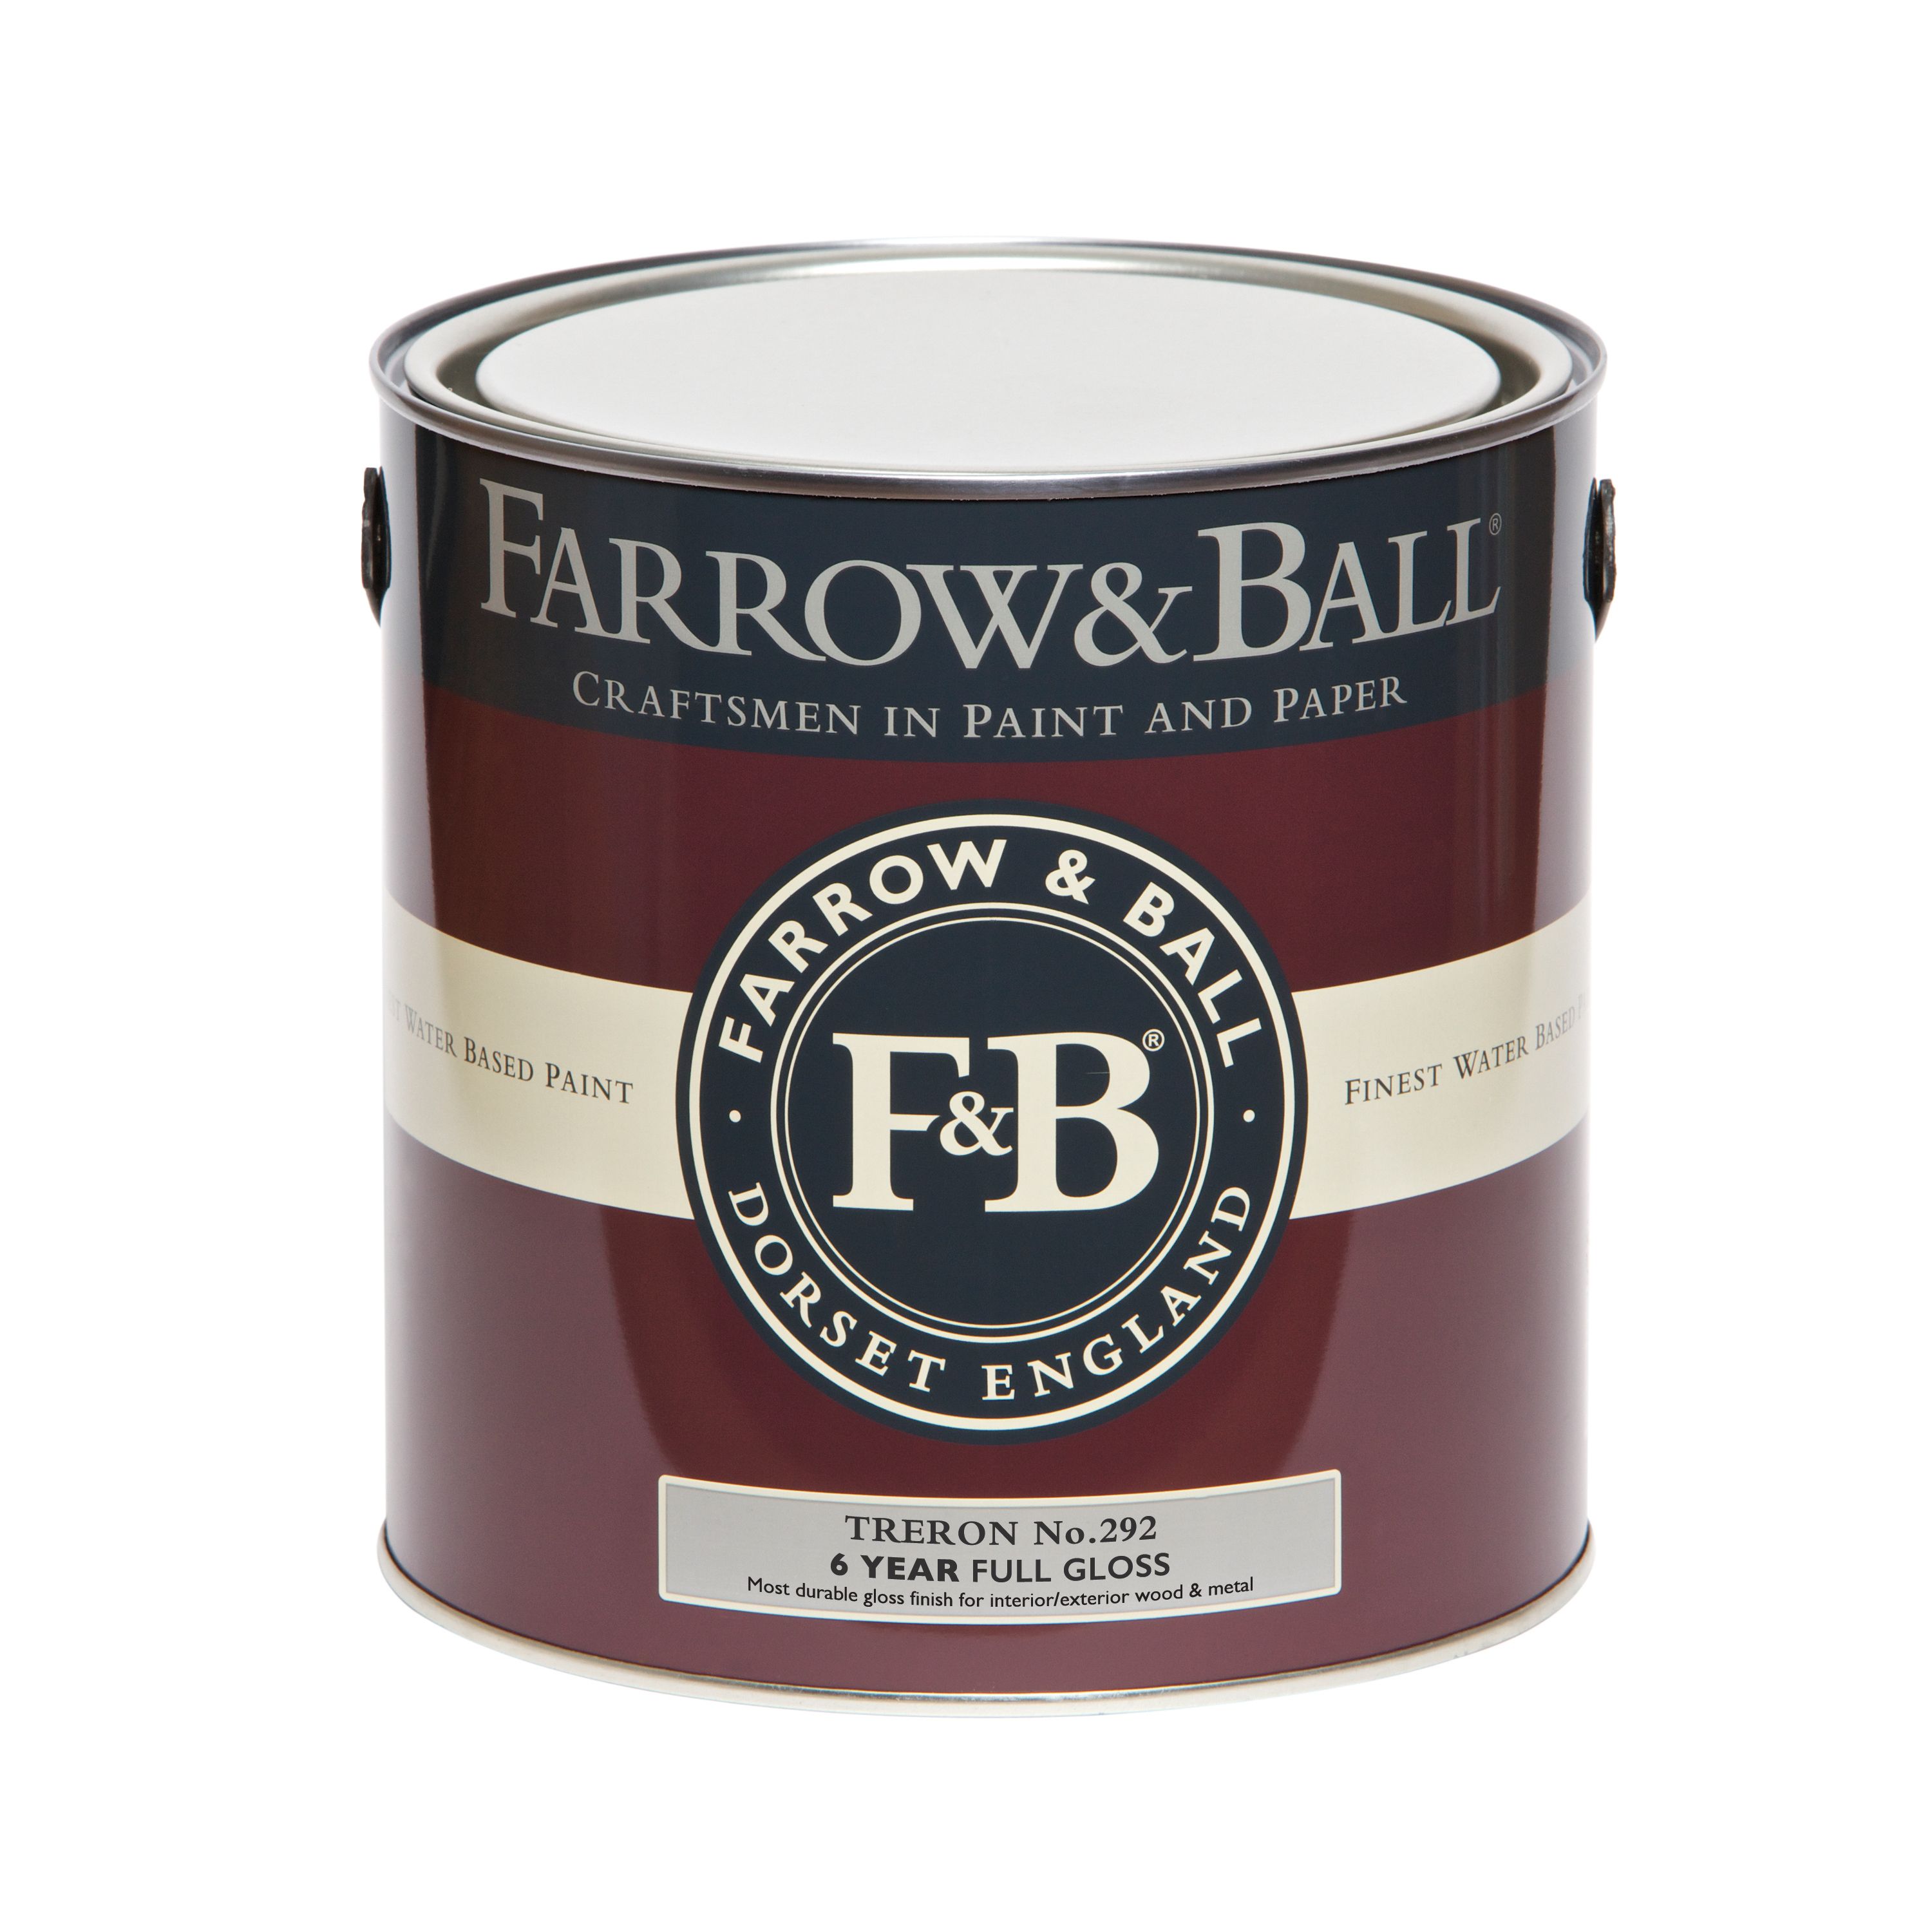 Farrow & Ball Treron Gloss Metal & wood paint, 2.5L